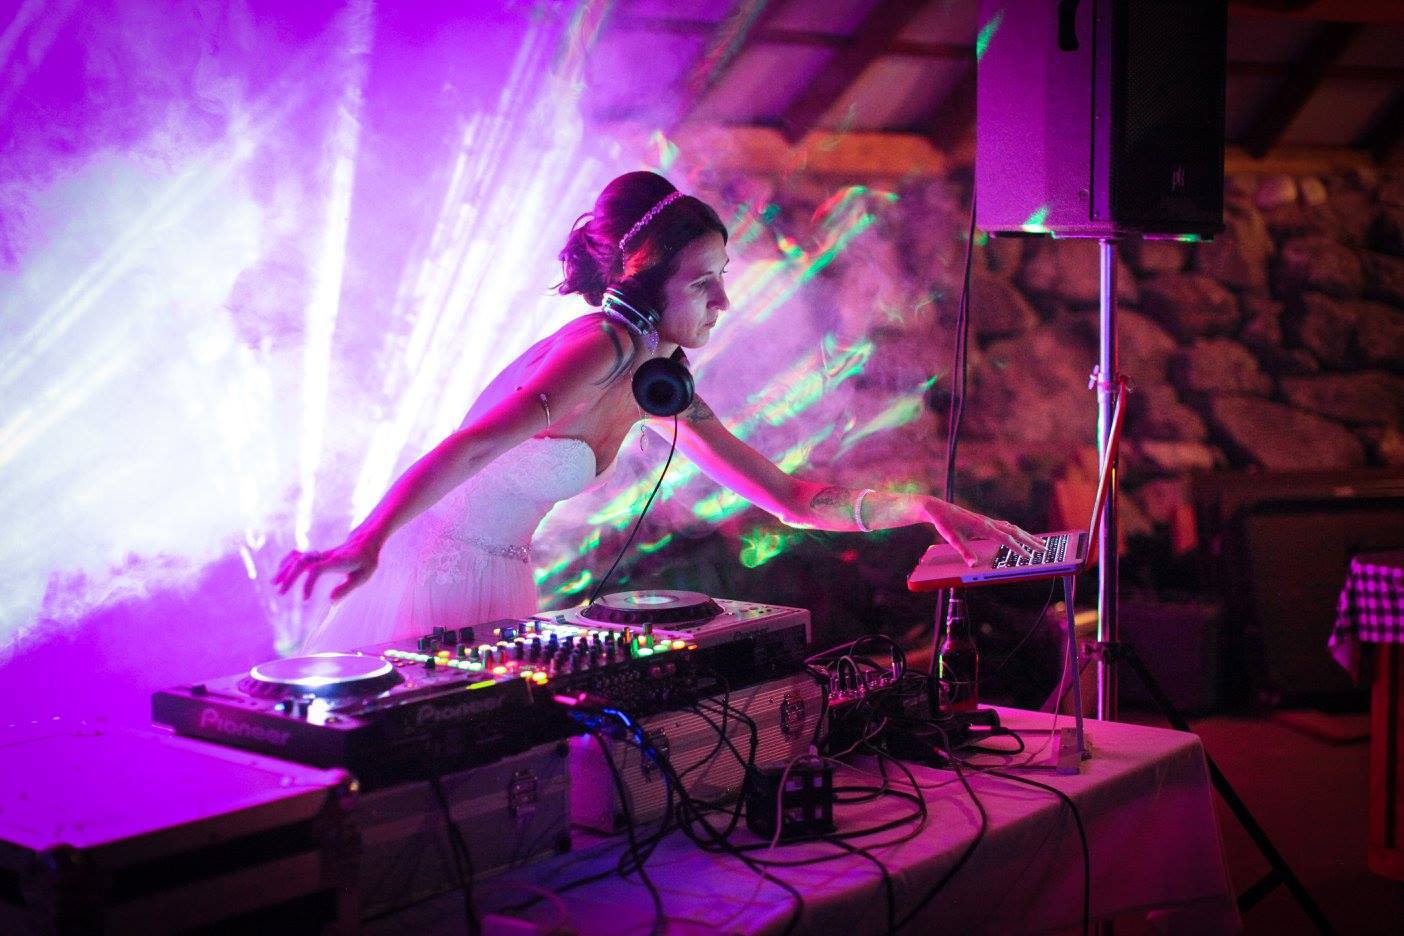 amplify her documentary on women DJs in electronic music